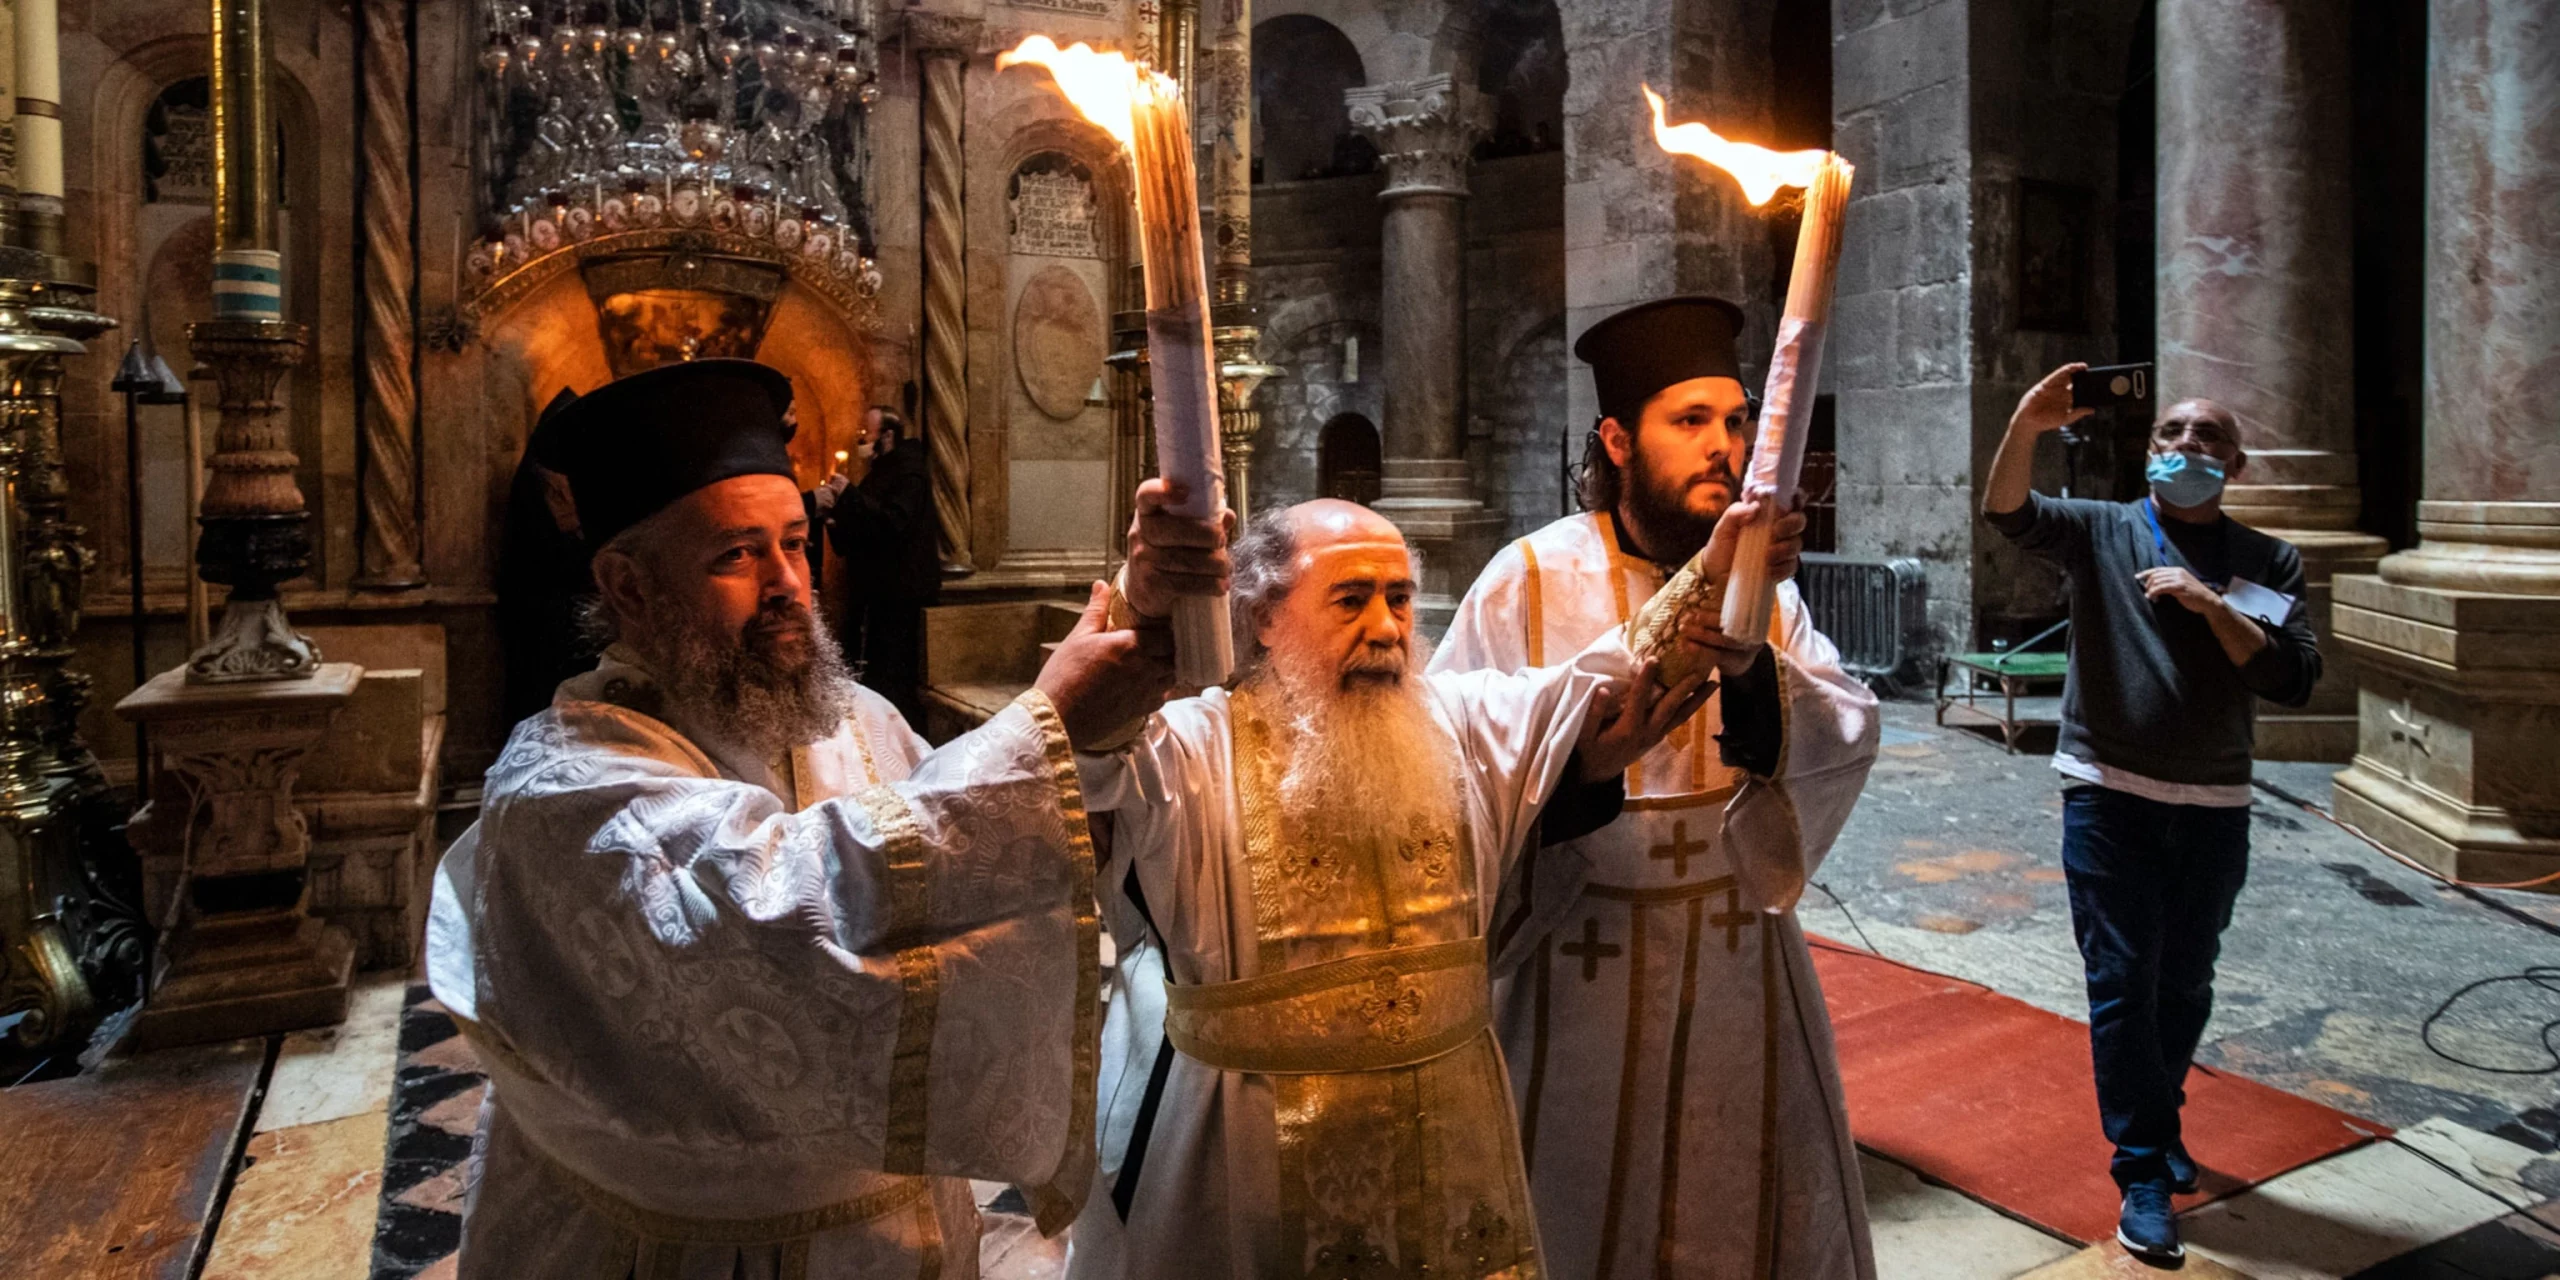 christians celebrating holy fire ceremony